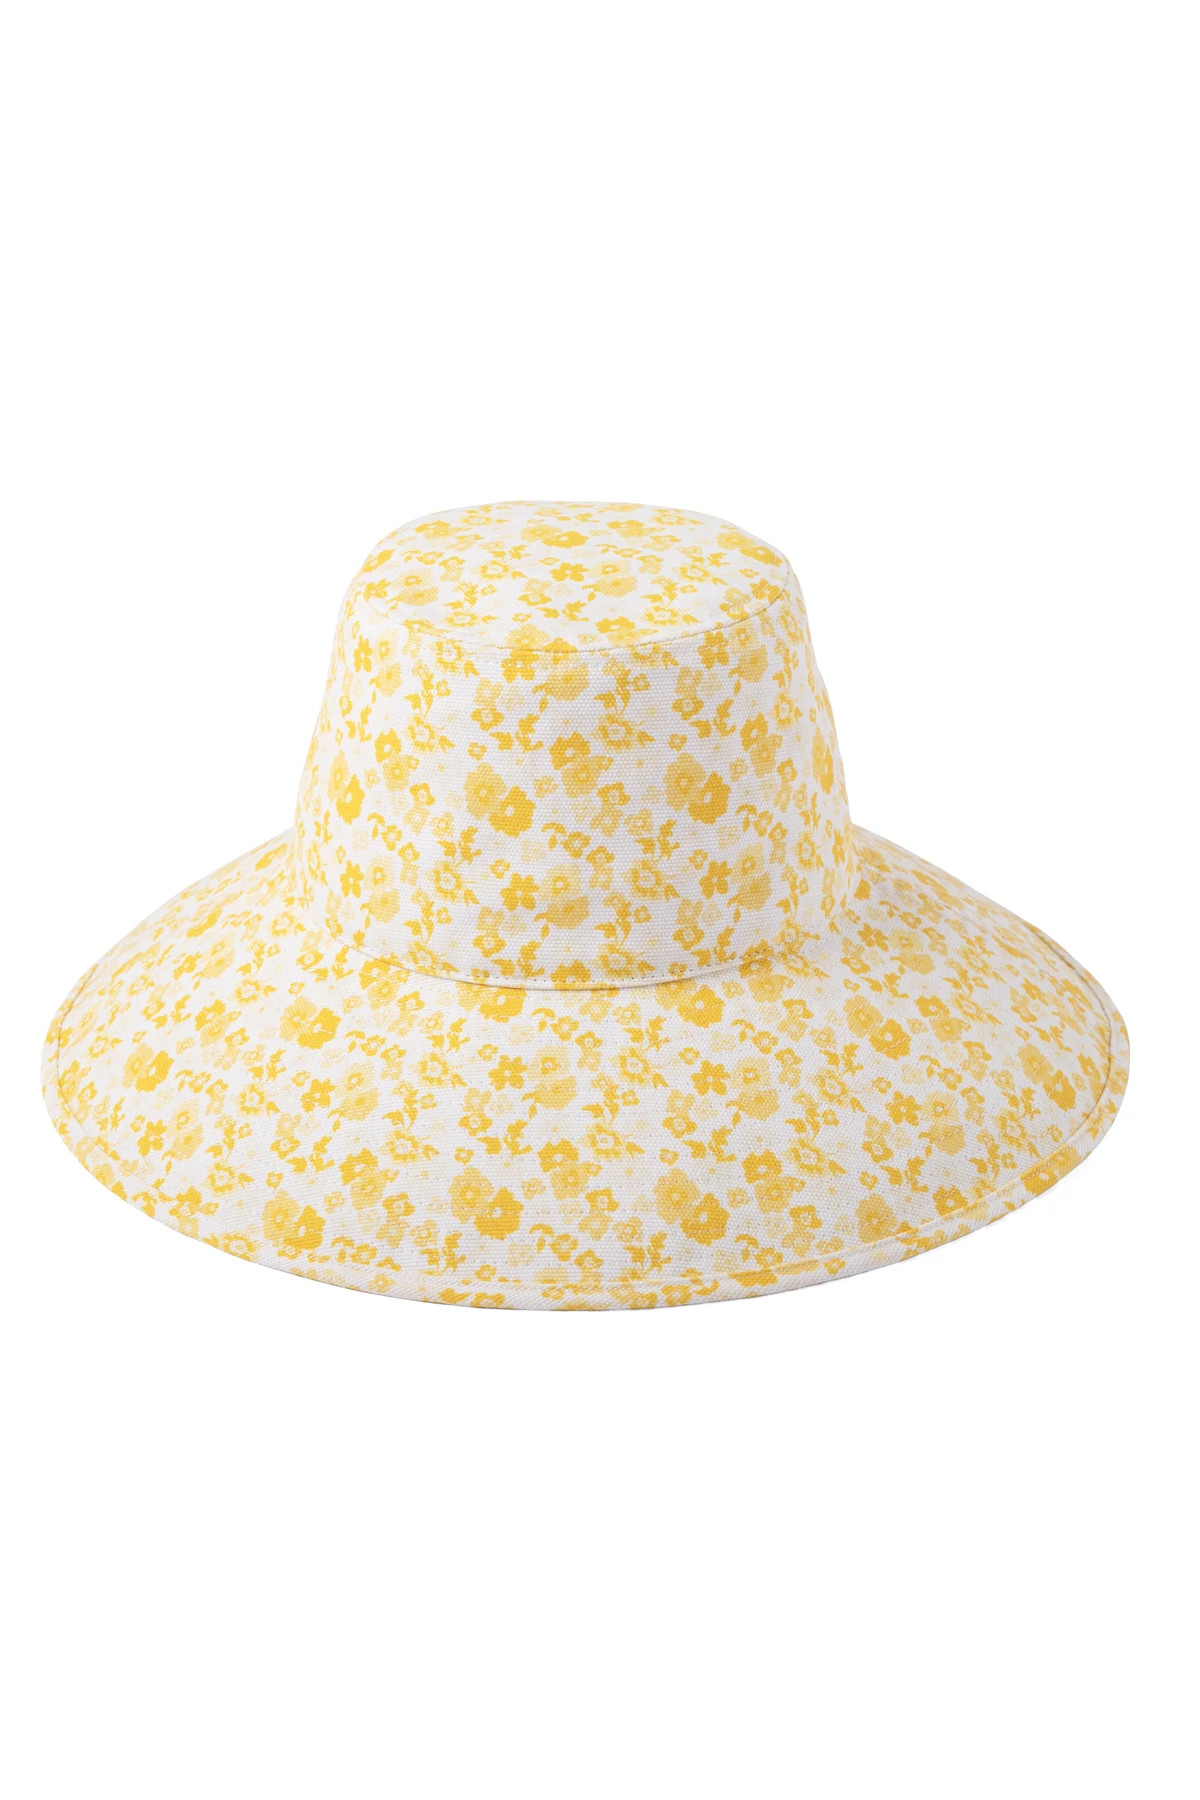 YELLOW Holiday Sunshine Bloom Bucket Hat image number 1